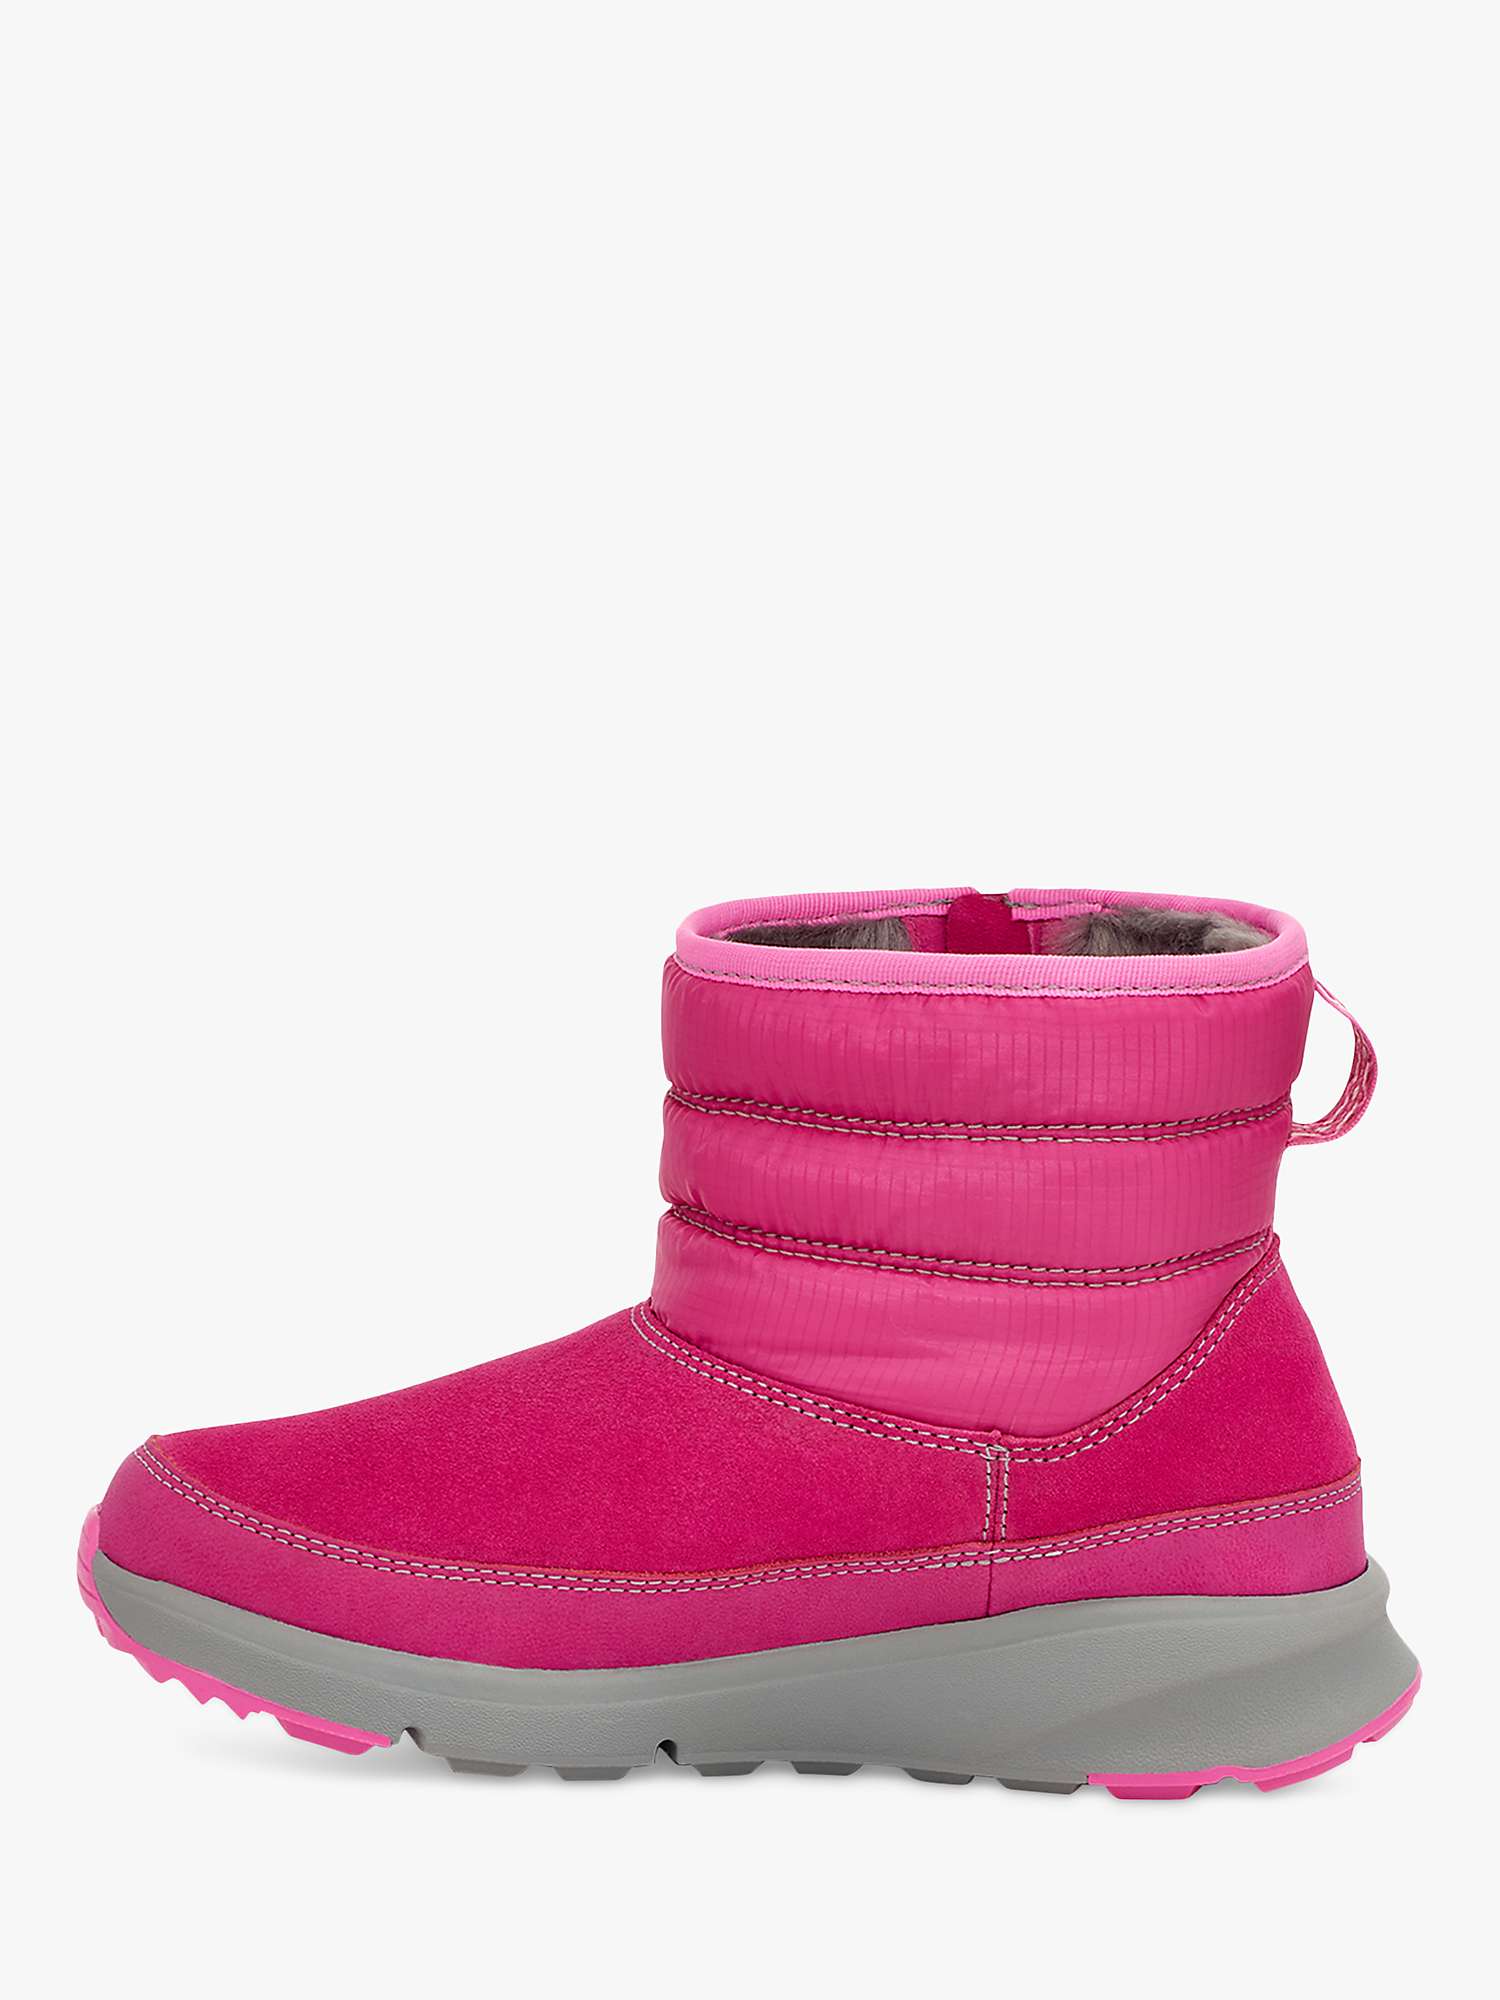 Buy UGG Kids' Truckee Weather Boots Online at johnlewis.com